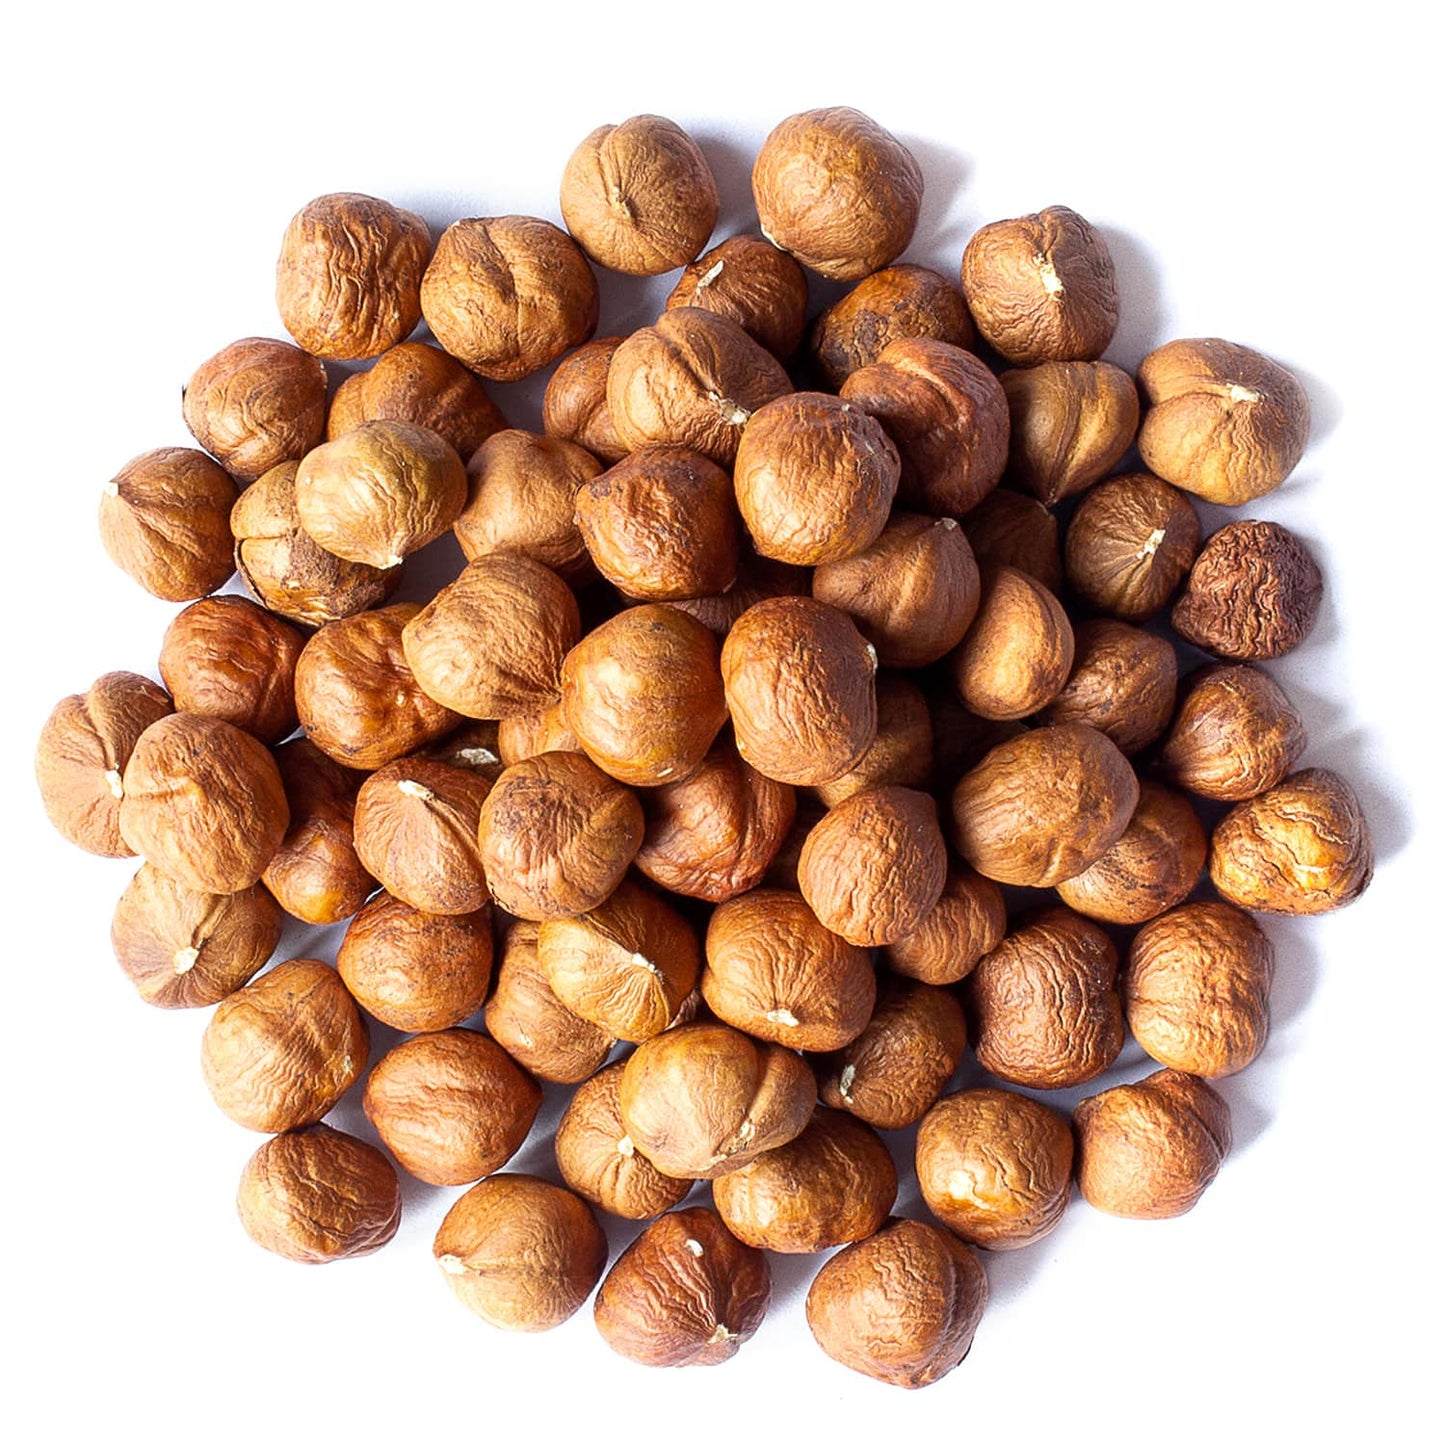 Hazelnuts / Filberts — Non-GMO Verified, Raw, No Shell, Kosher, Bulk - by Food to Live